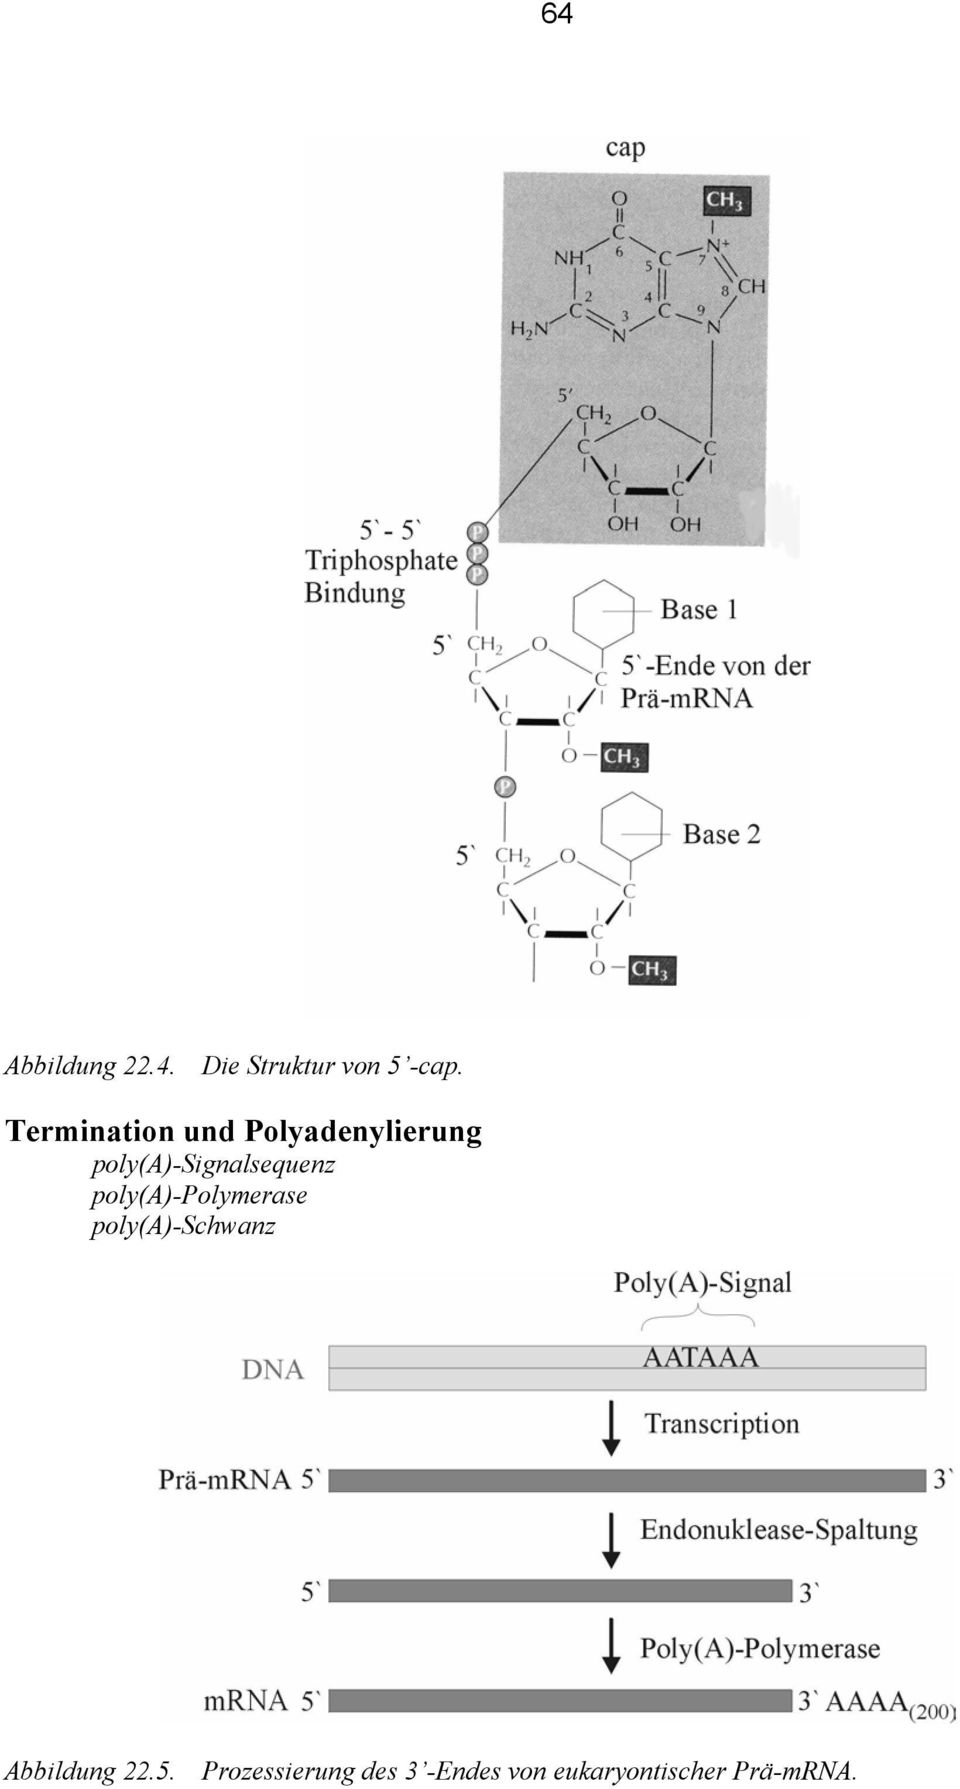 poly(a)-signalsequenz poly(a)-polymerase